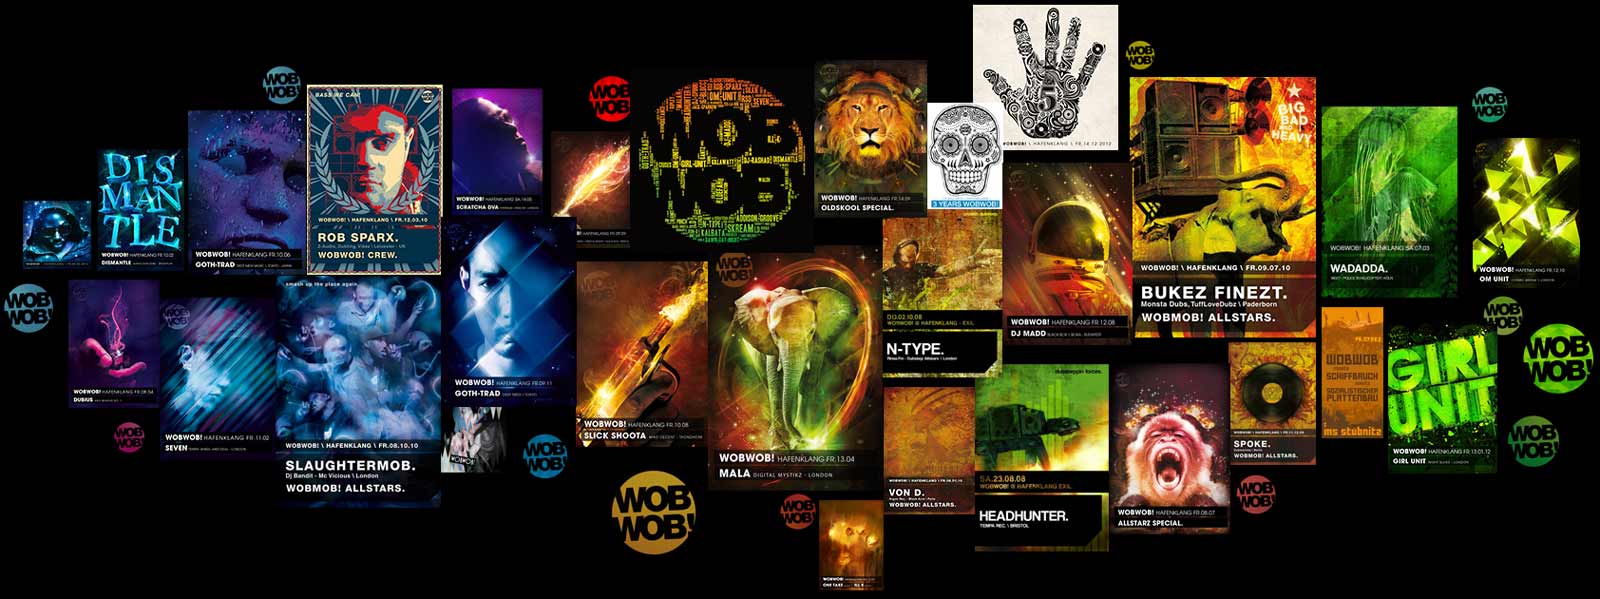 wobwob dubstep/bass flyer 2007 - 2015